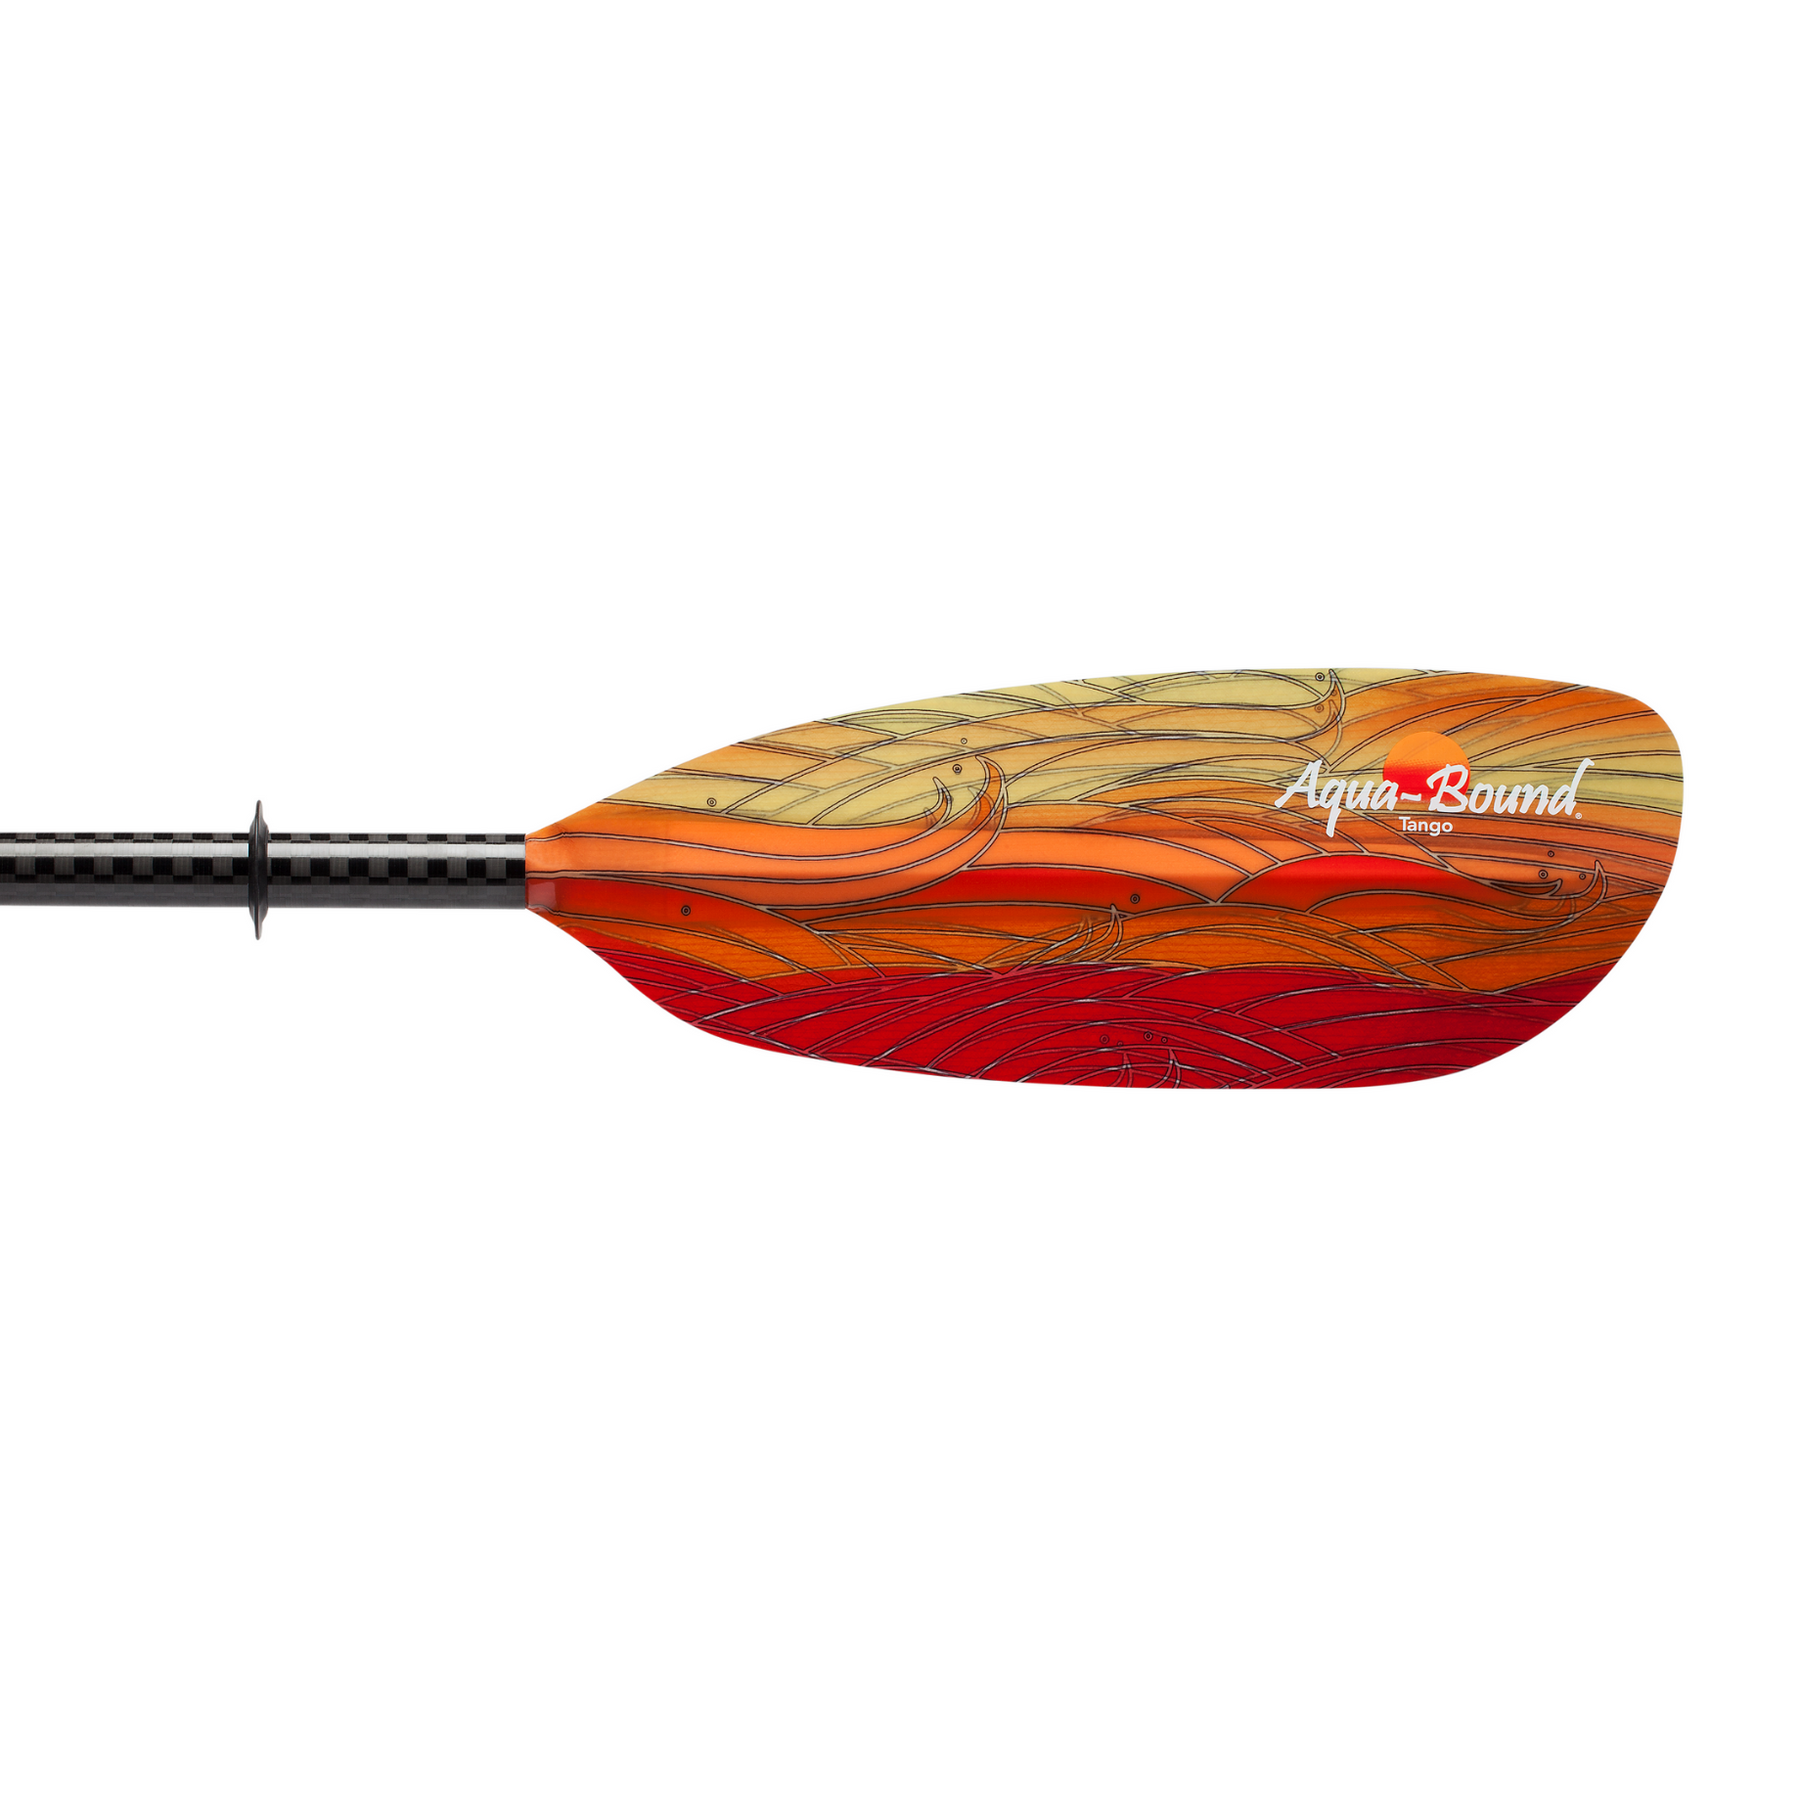 Aquabound - Tango Fiberglass Paddle